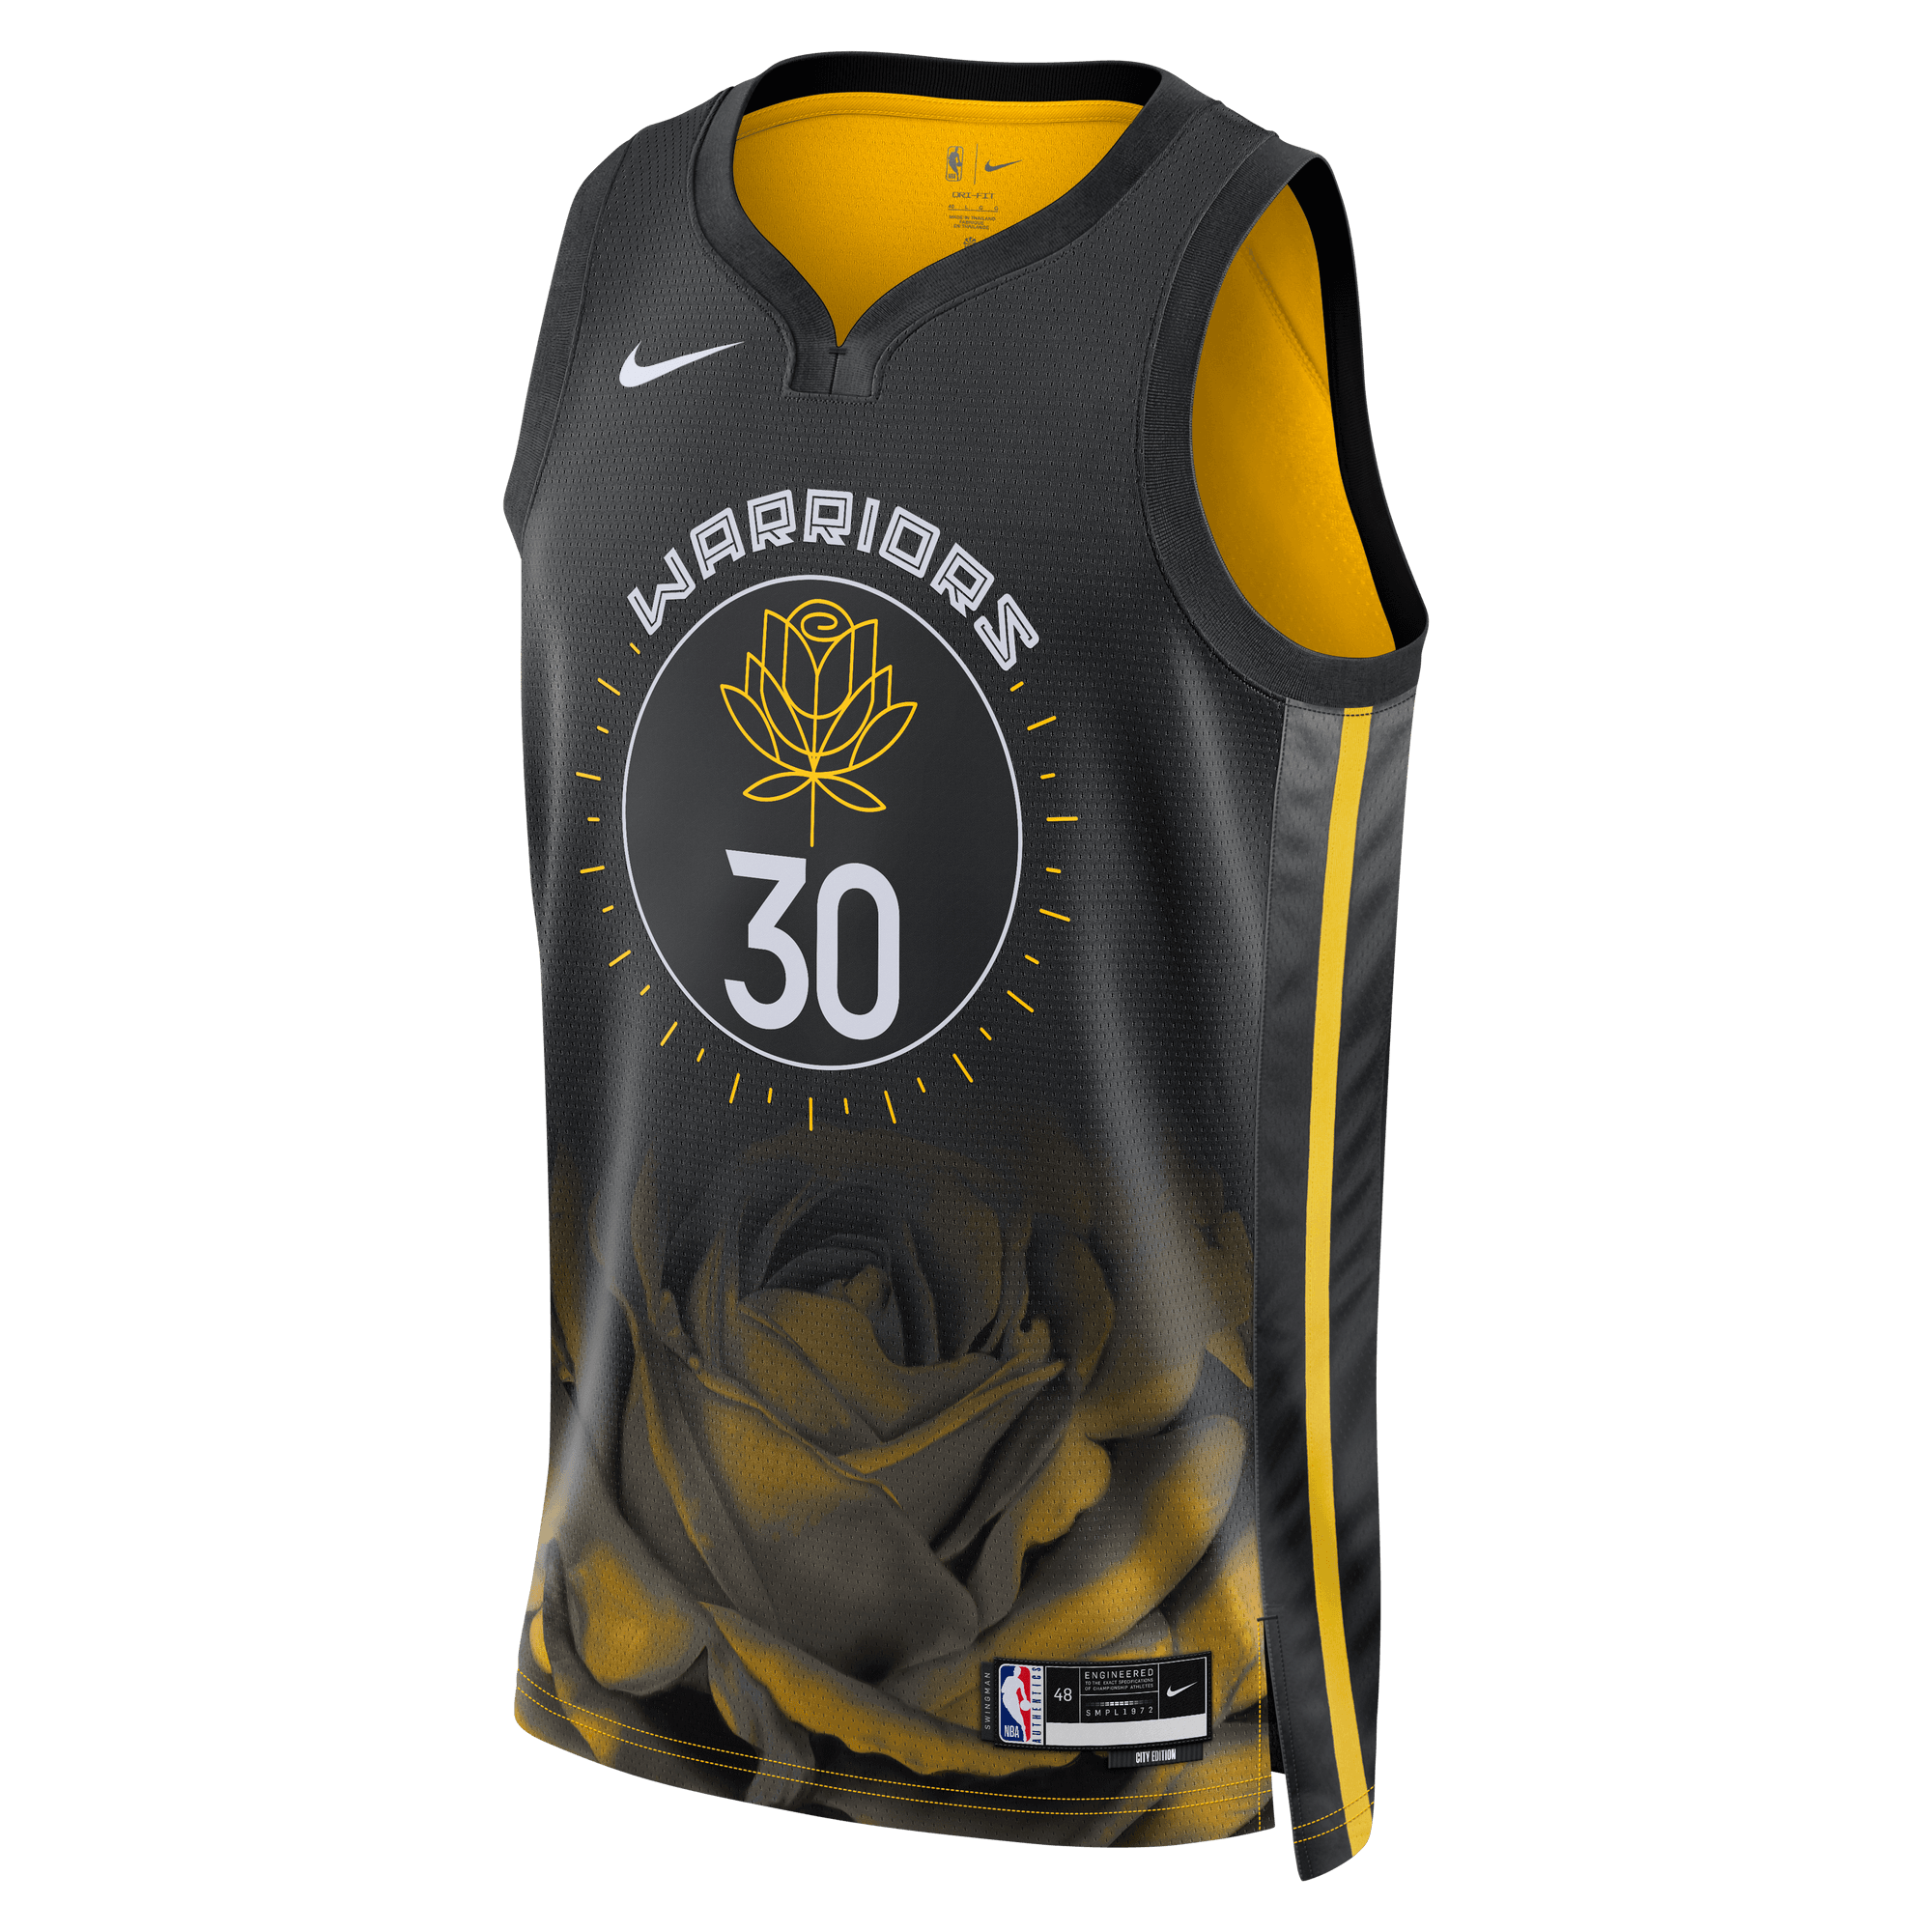 golden state warriors jersey design